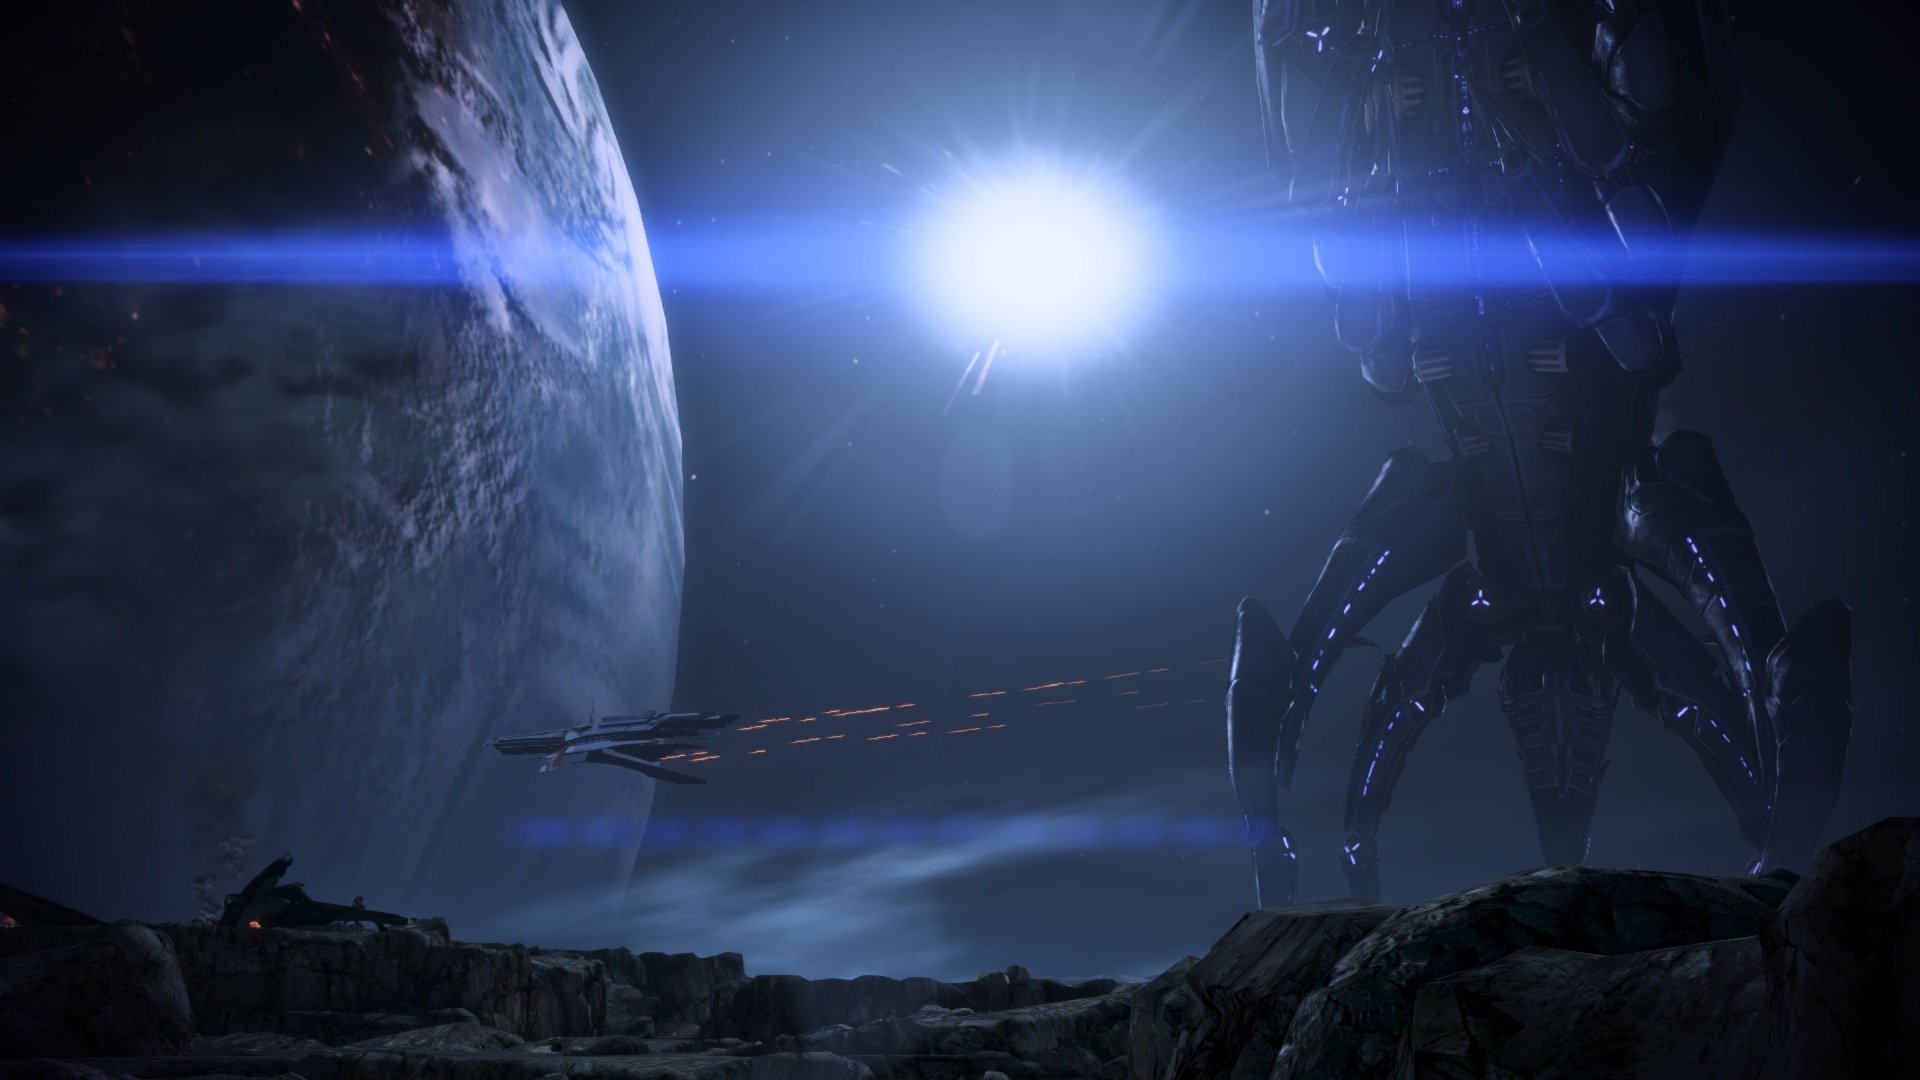 Mass Effect 3 HD Wallpaper Background Image 1920x1080 